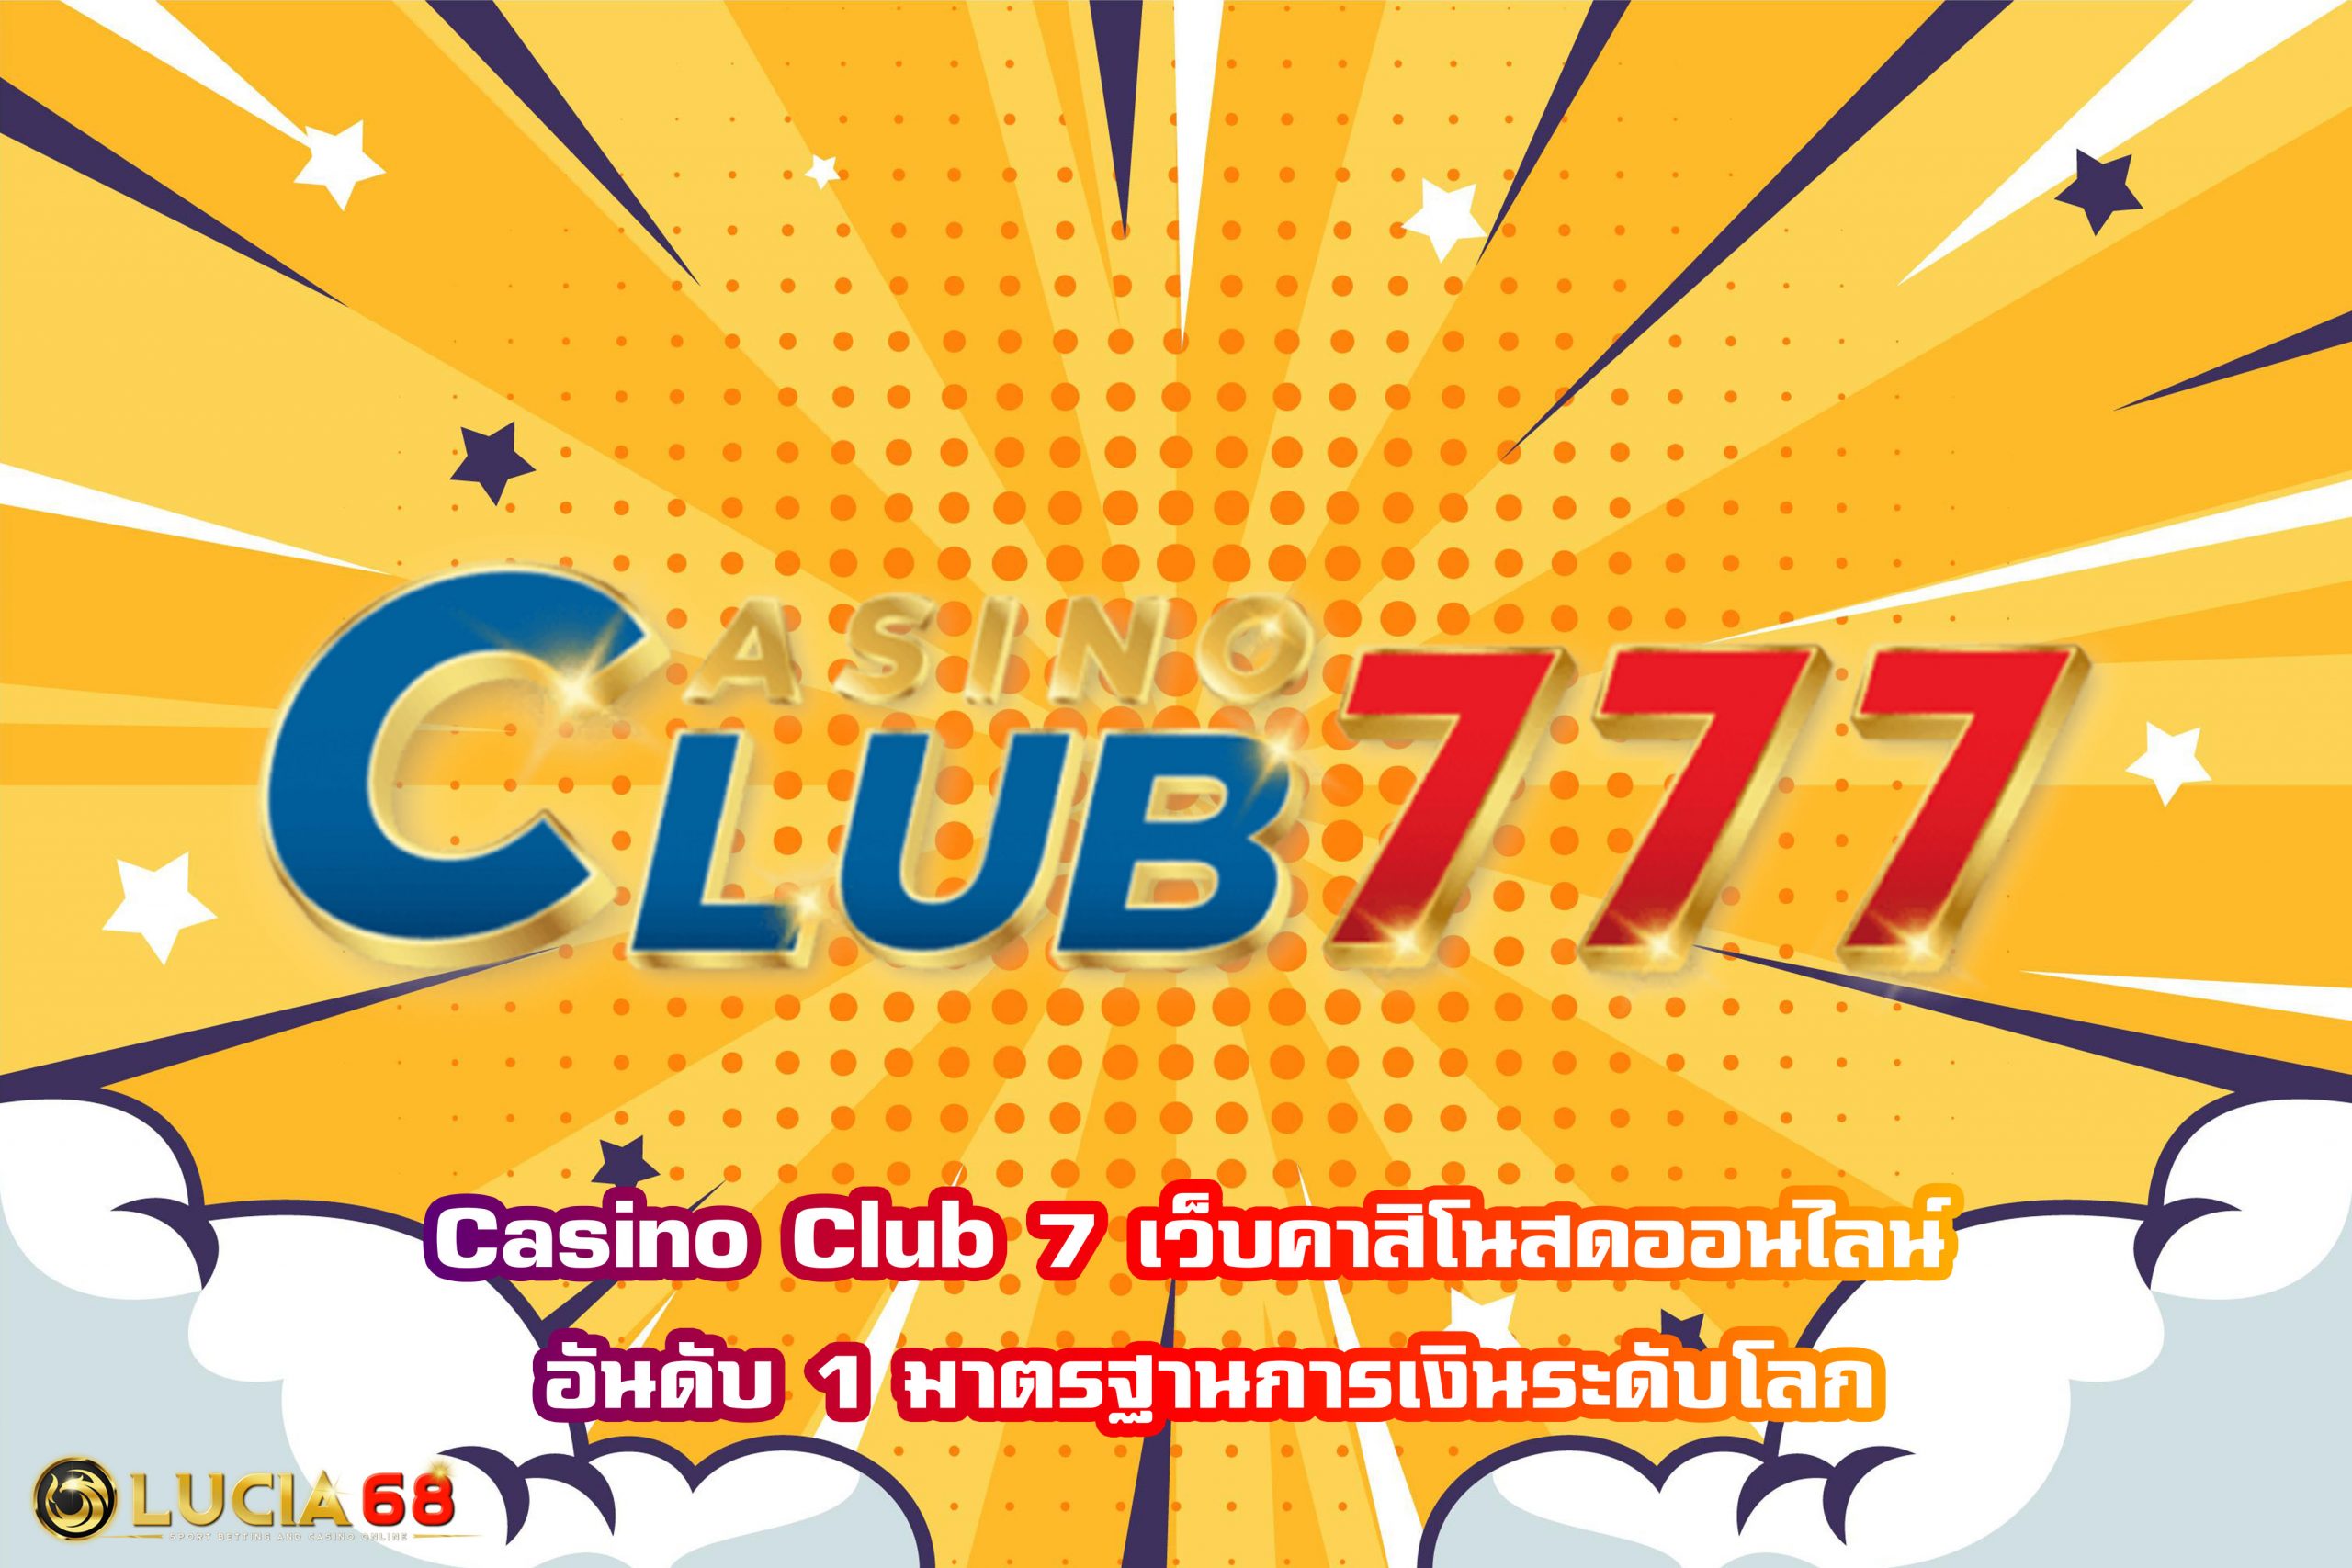 Casino Club 7 เว็บคาสิโนสดออนไลน์ อันดับ 1 มาตรฐานการเงินระดับโลก